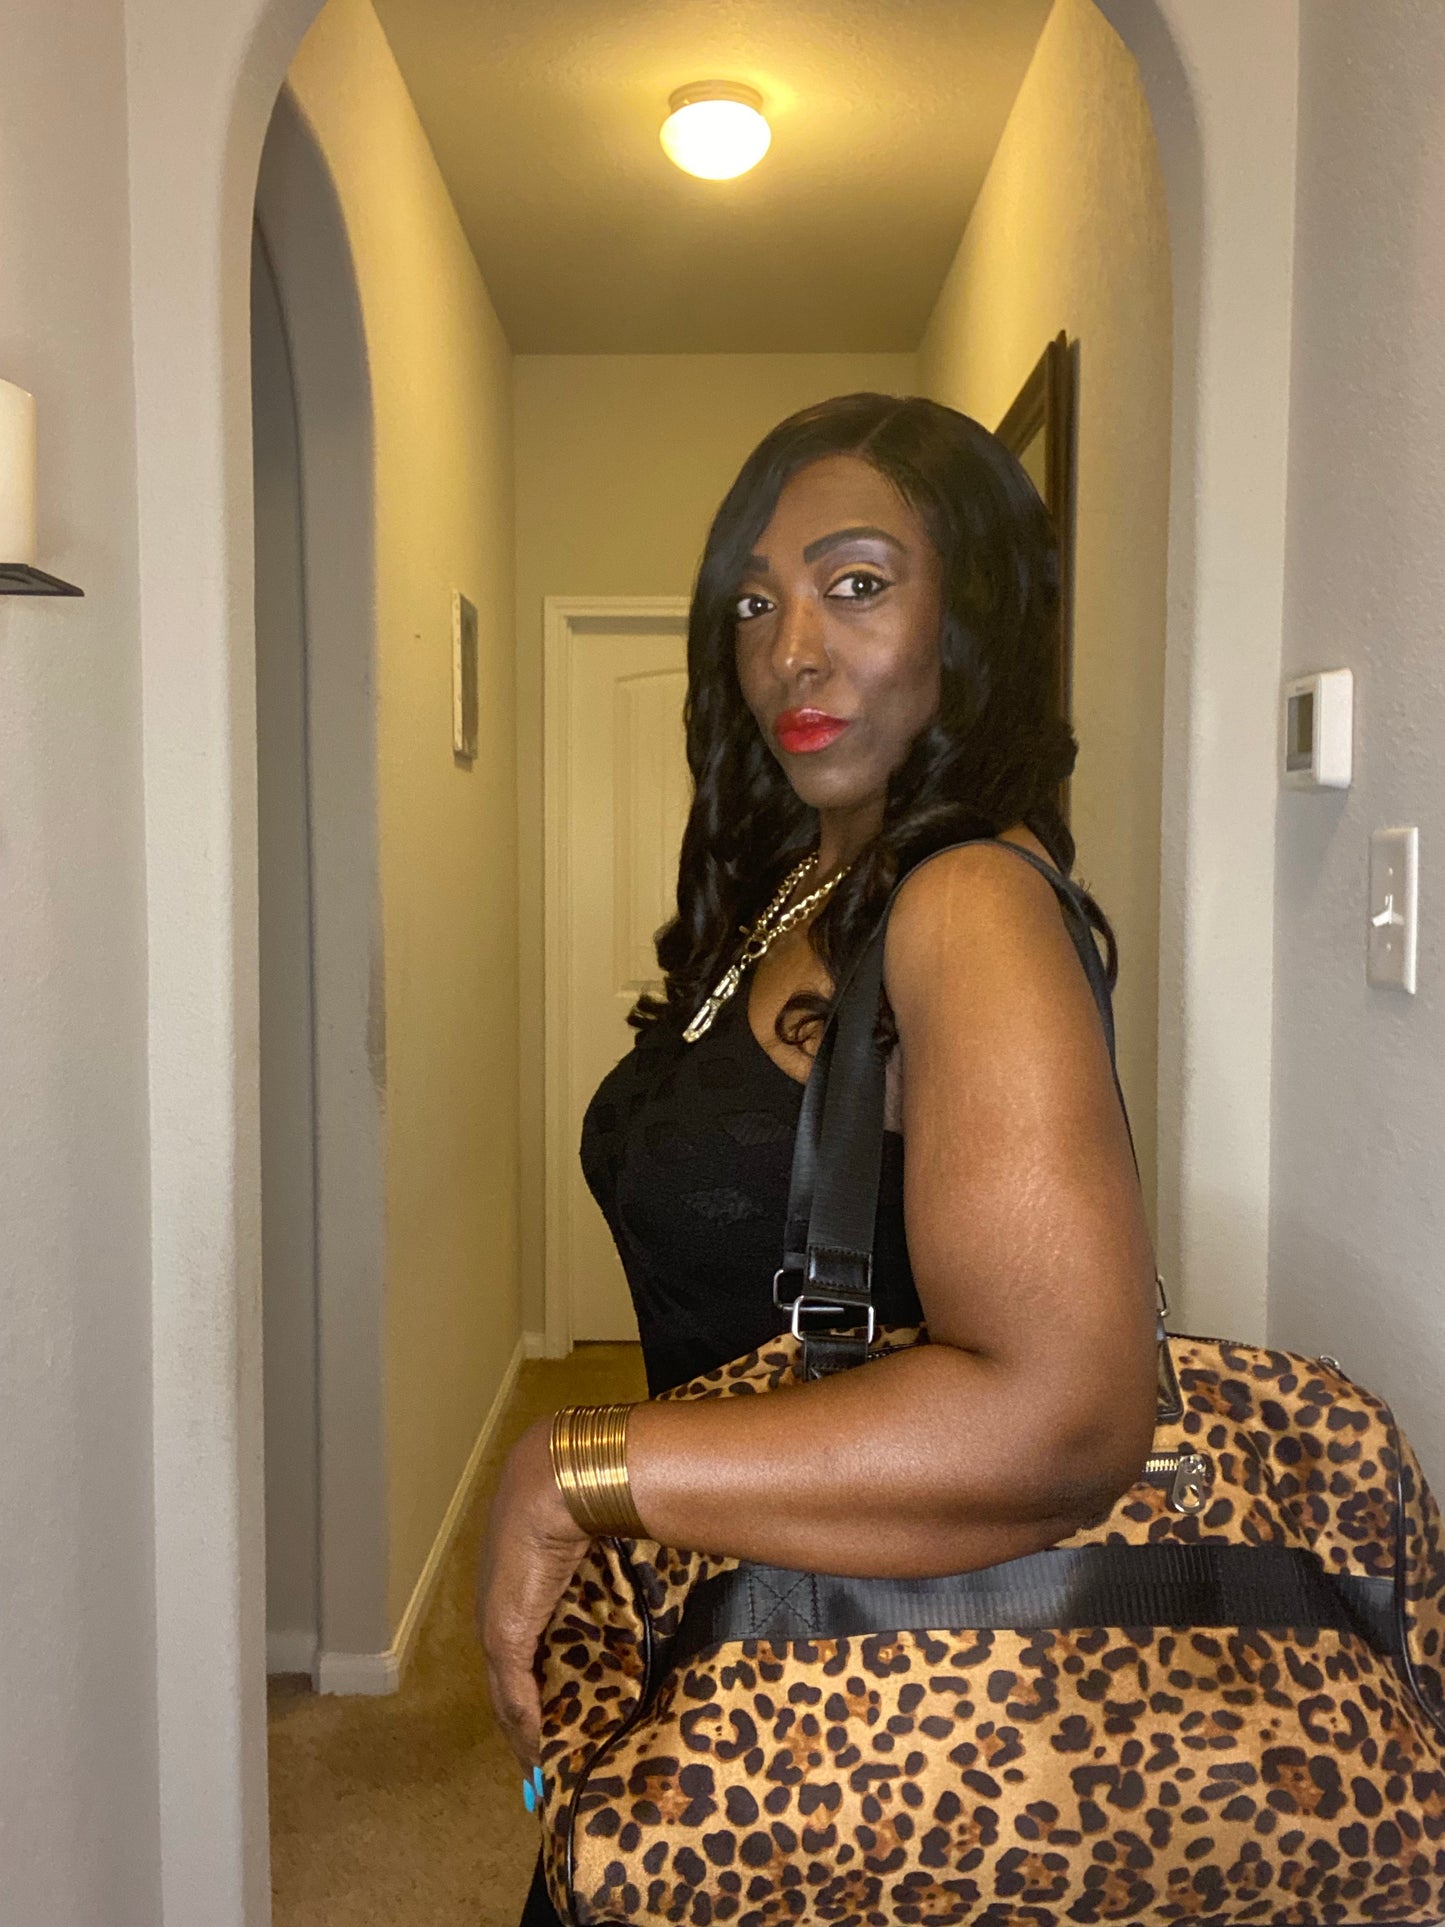 Women’s Leopard Duffel Overnight Bag